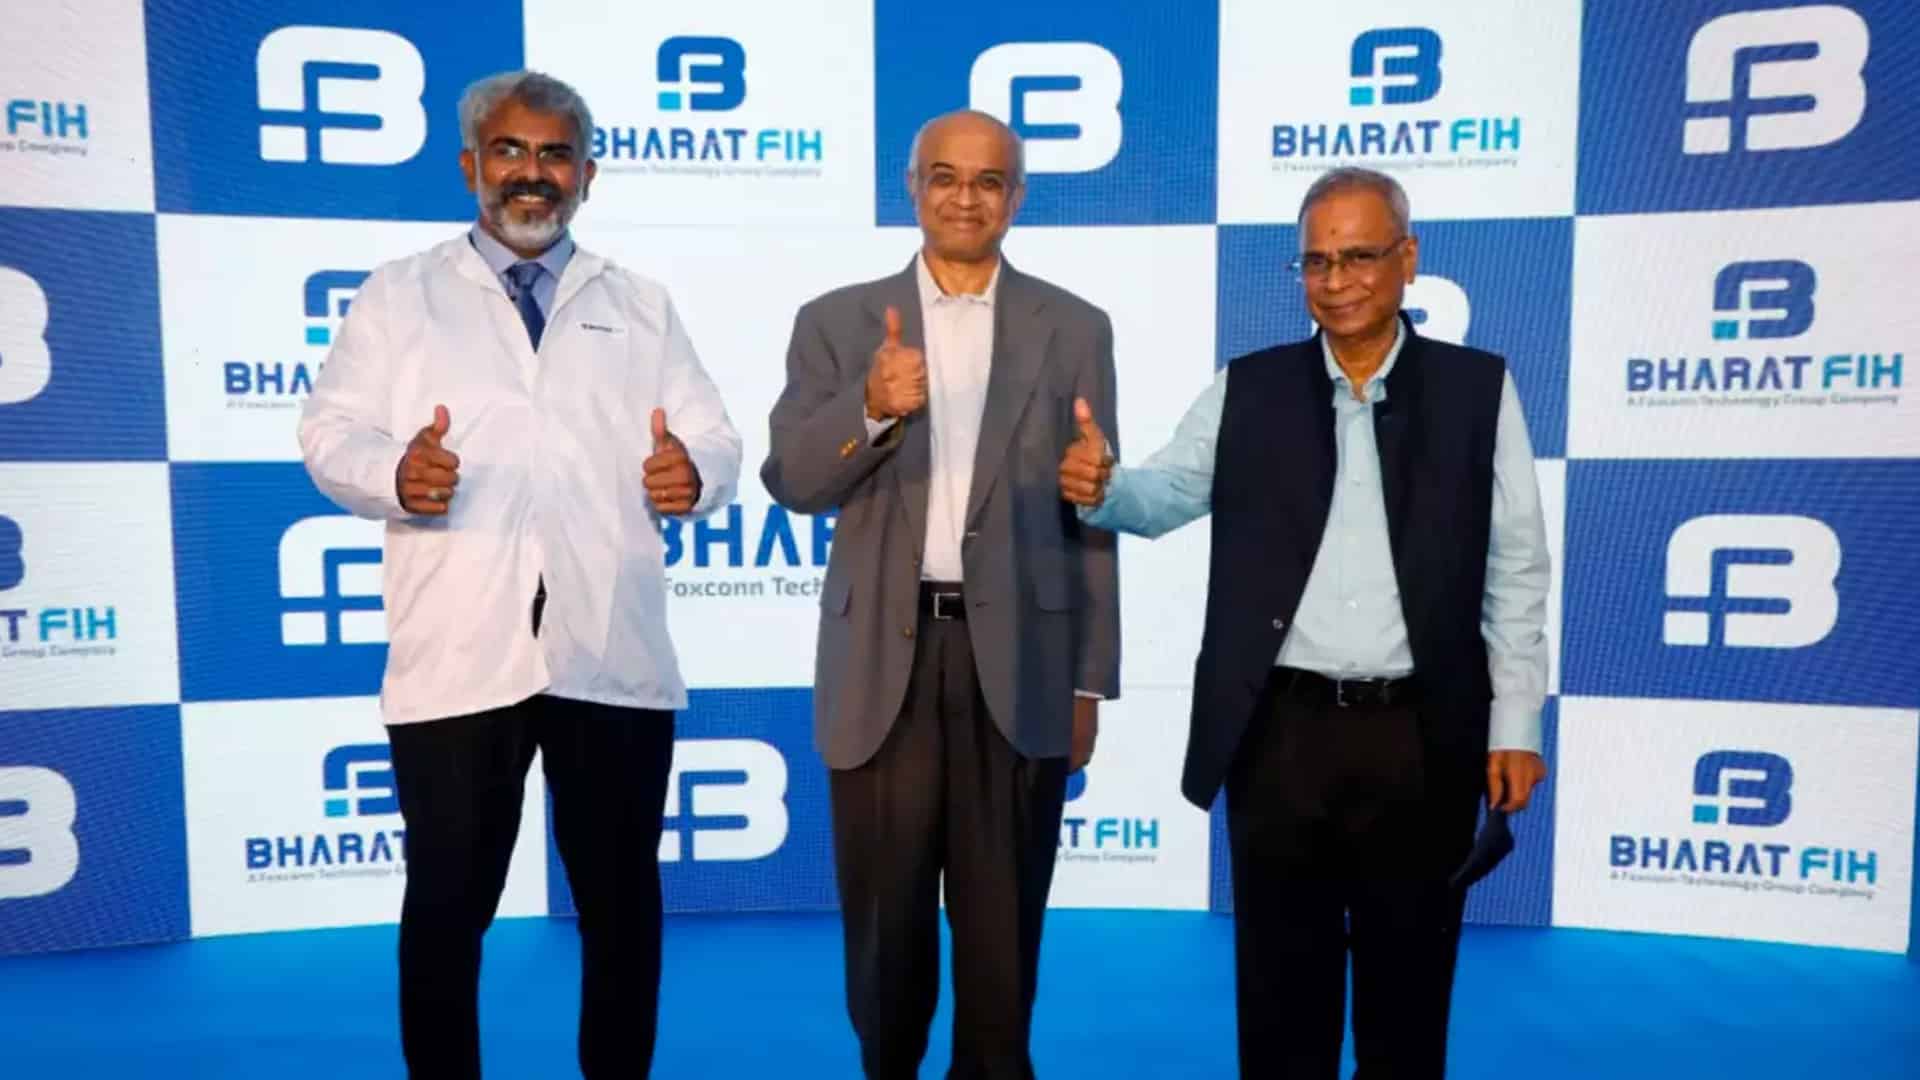 Foxconn's Bharat FIH opens research, development centre in Chennai